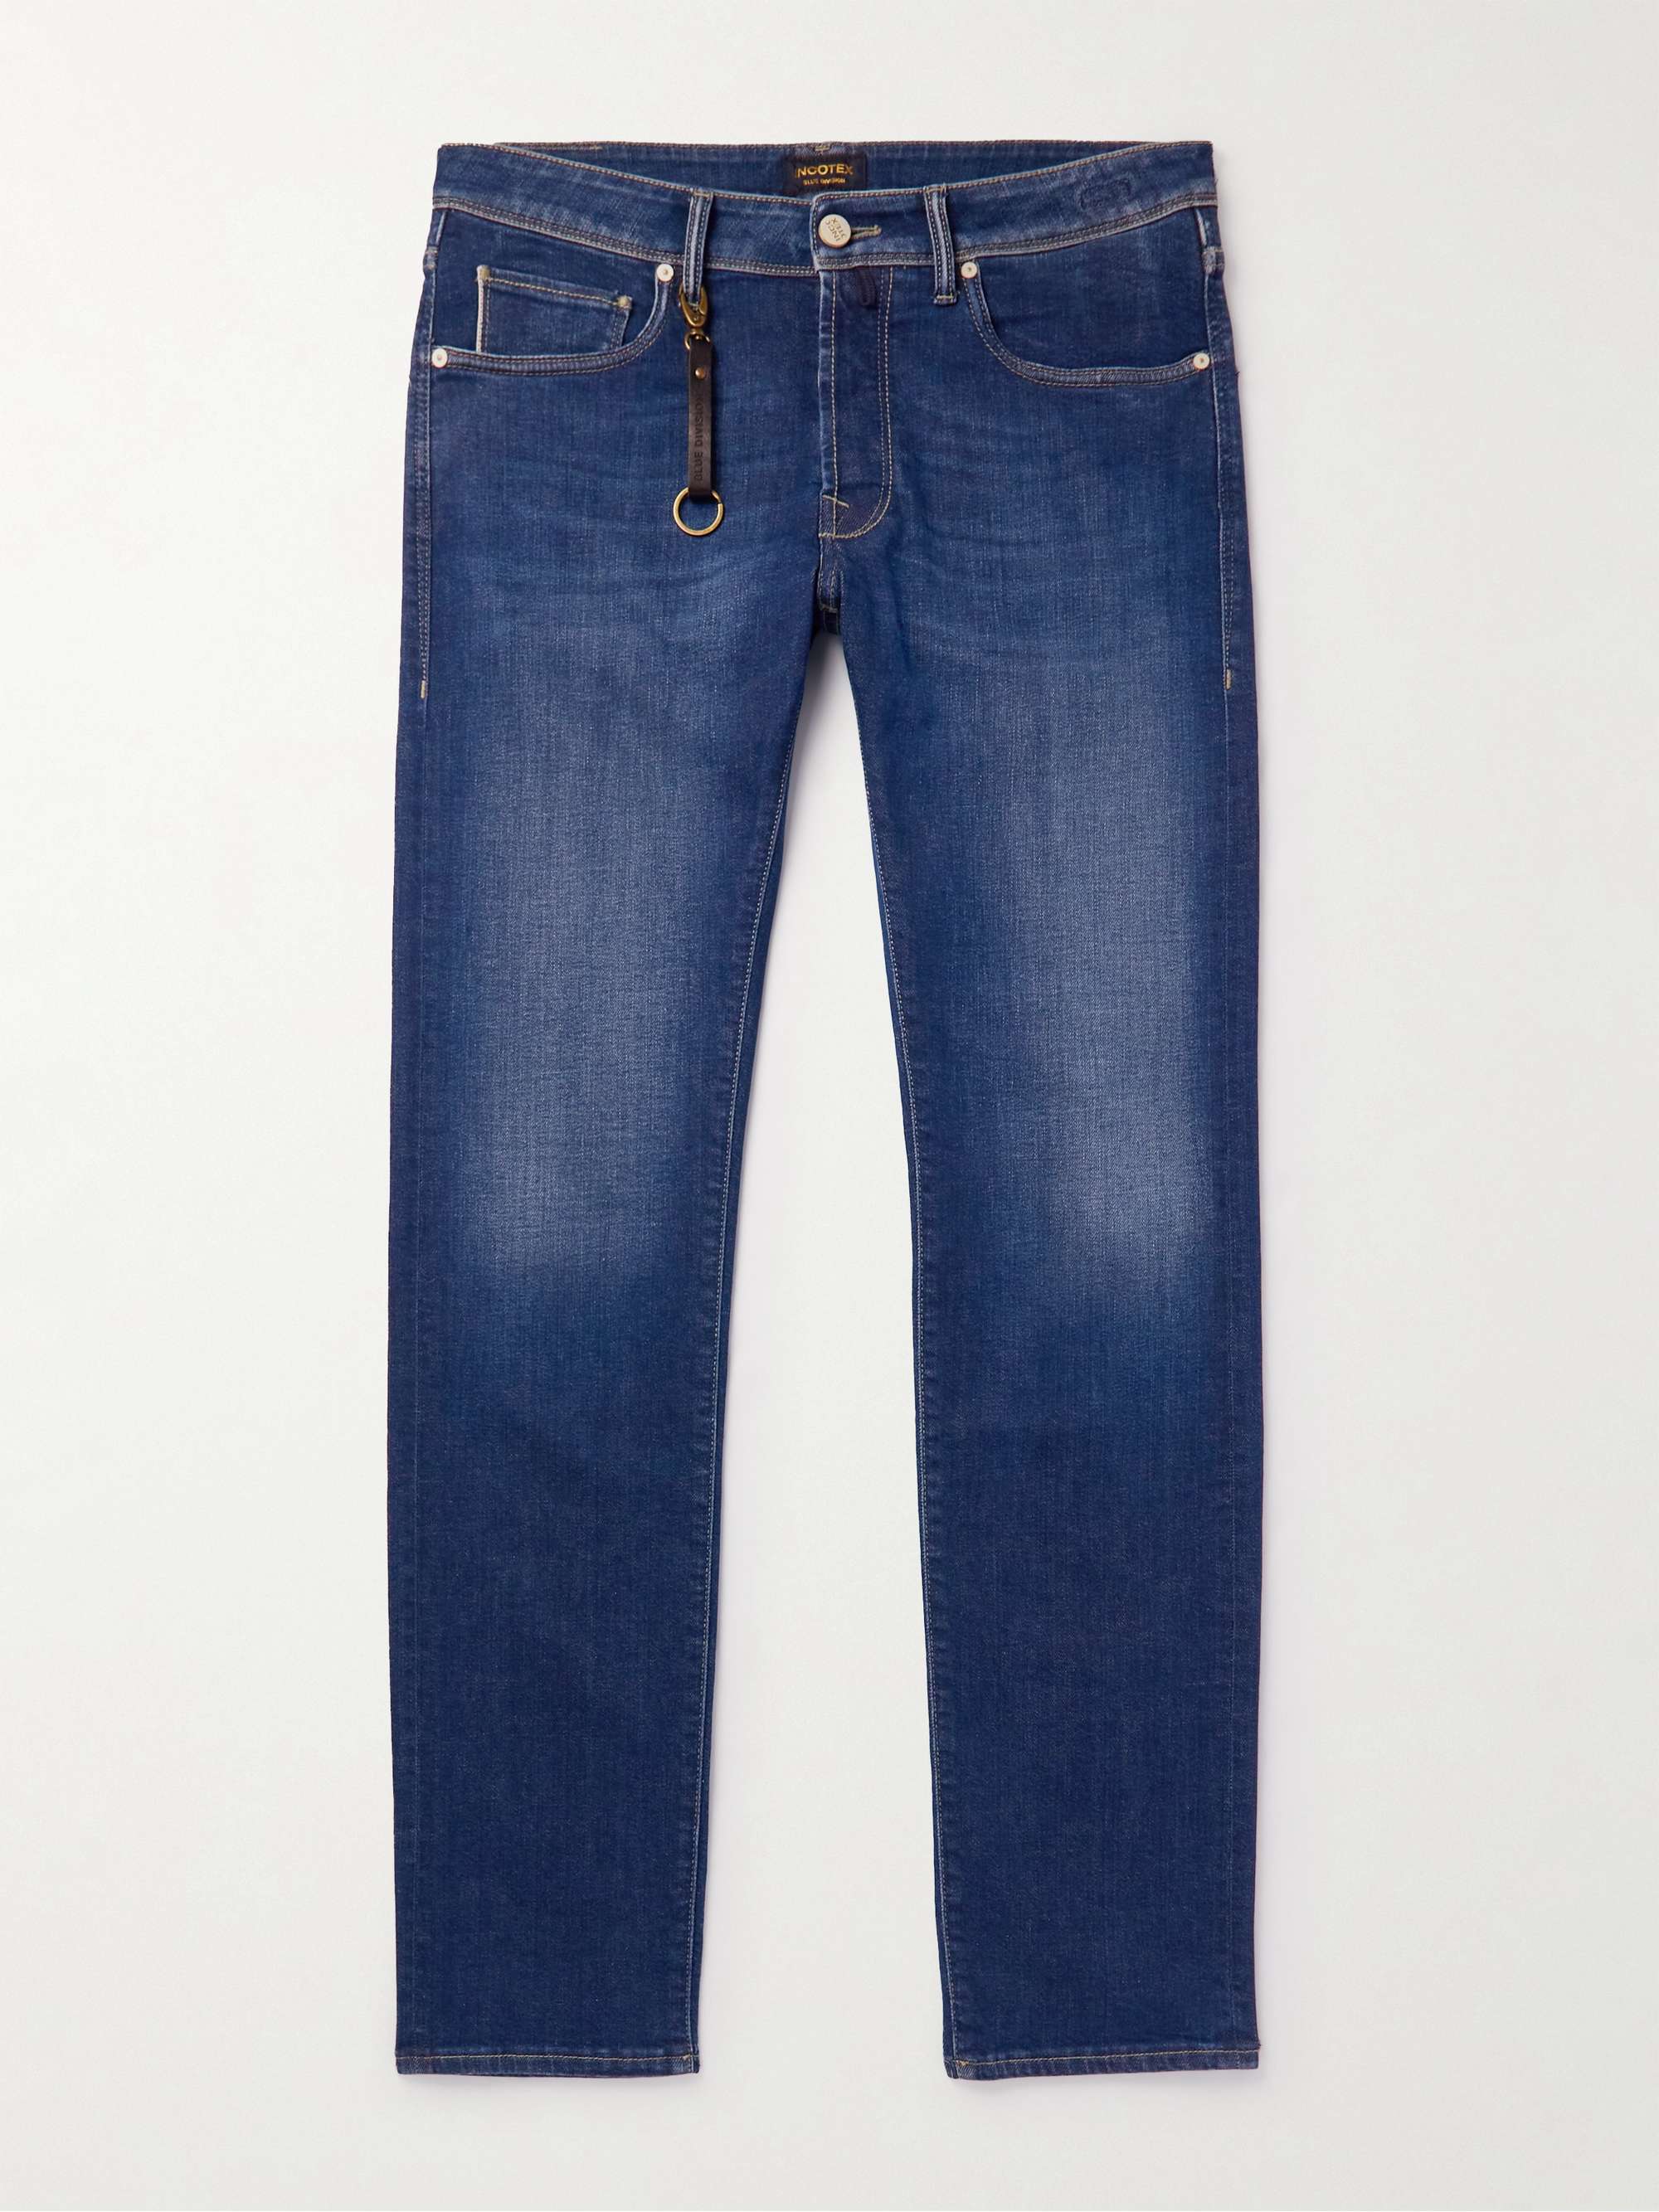 INCOTEX Slim-Fit Selvedge Jeans | MR PORTER